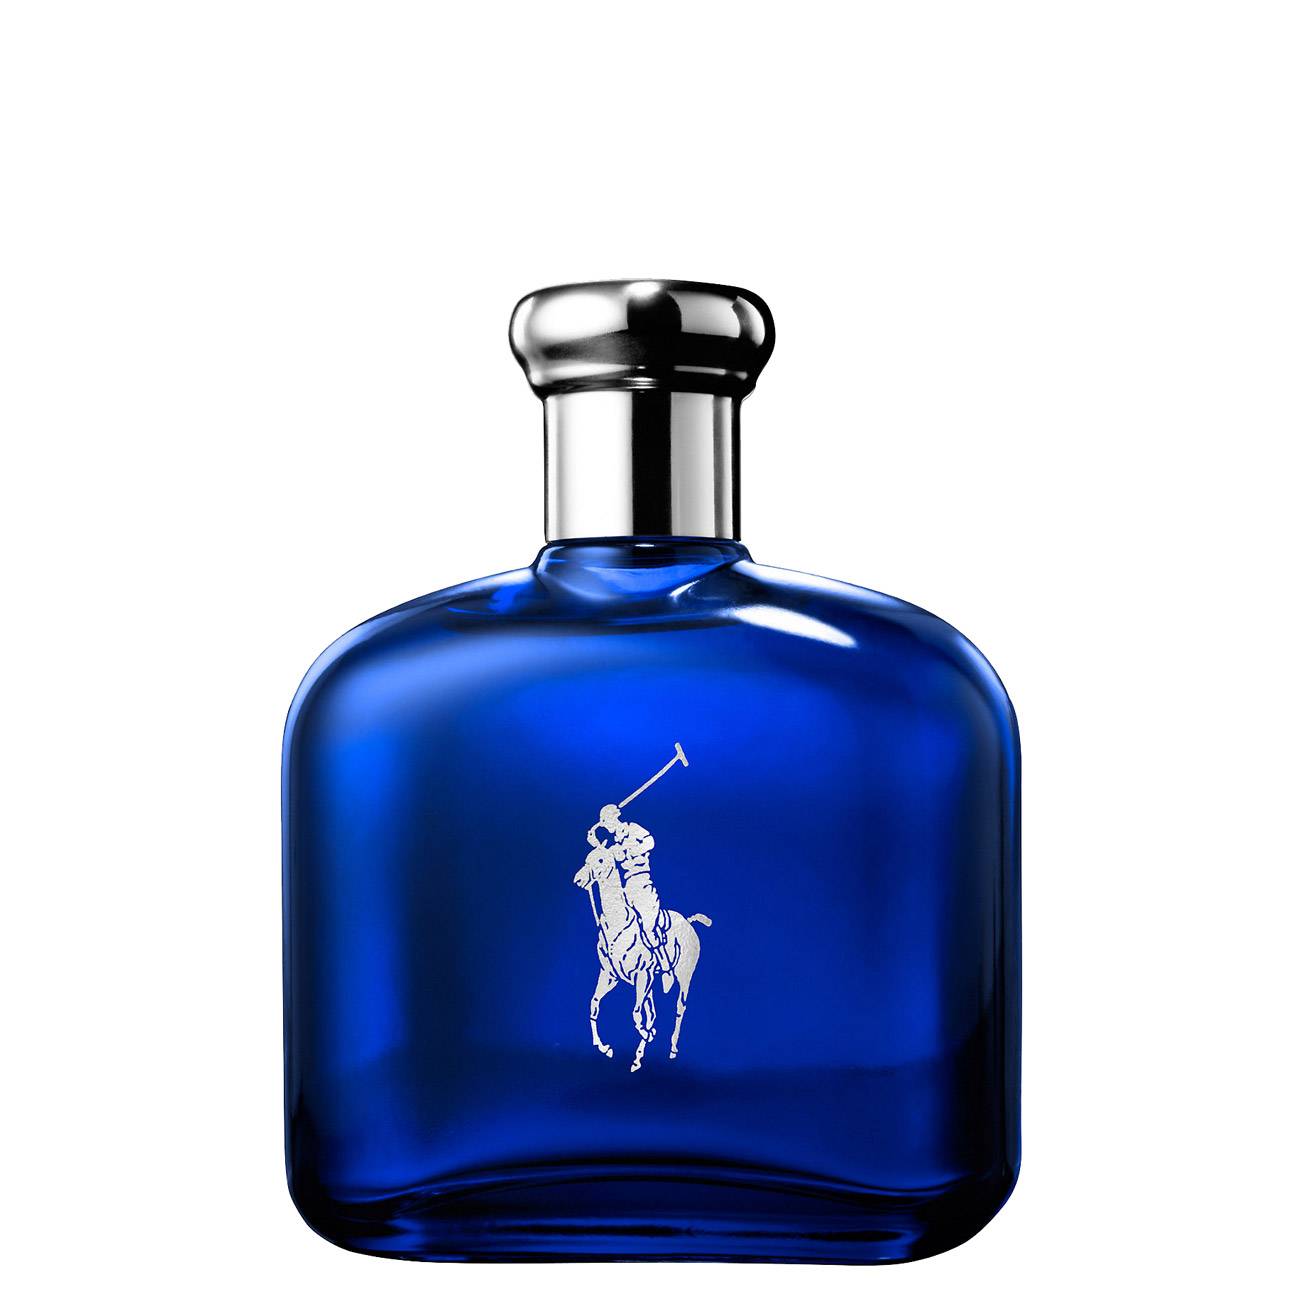 Apa de Parfum Ralph Lauren POLO BLUE 75 ML 75ml cu comanda online